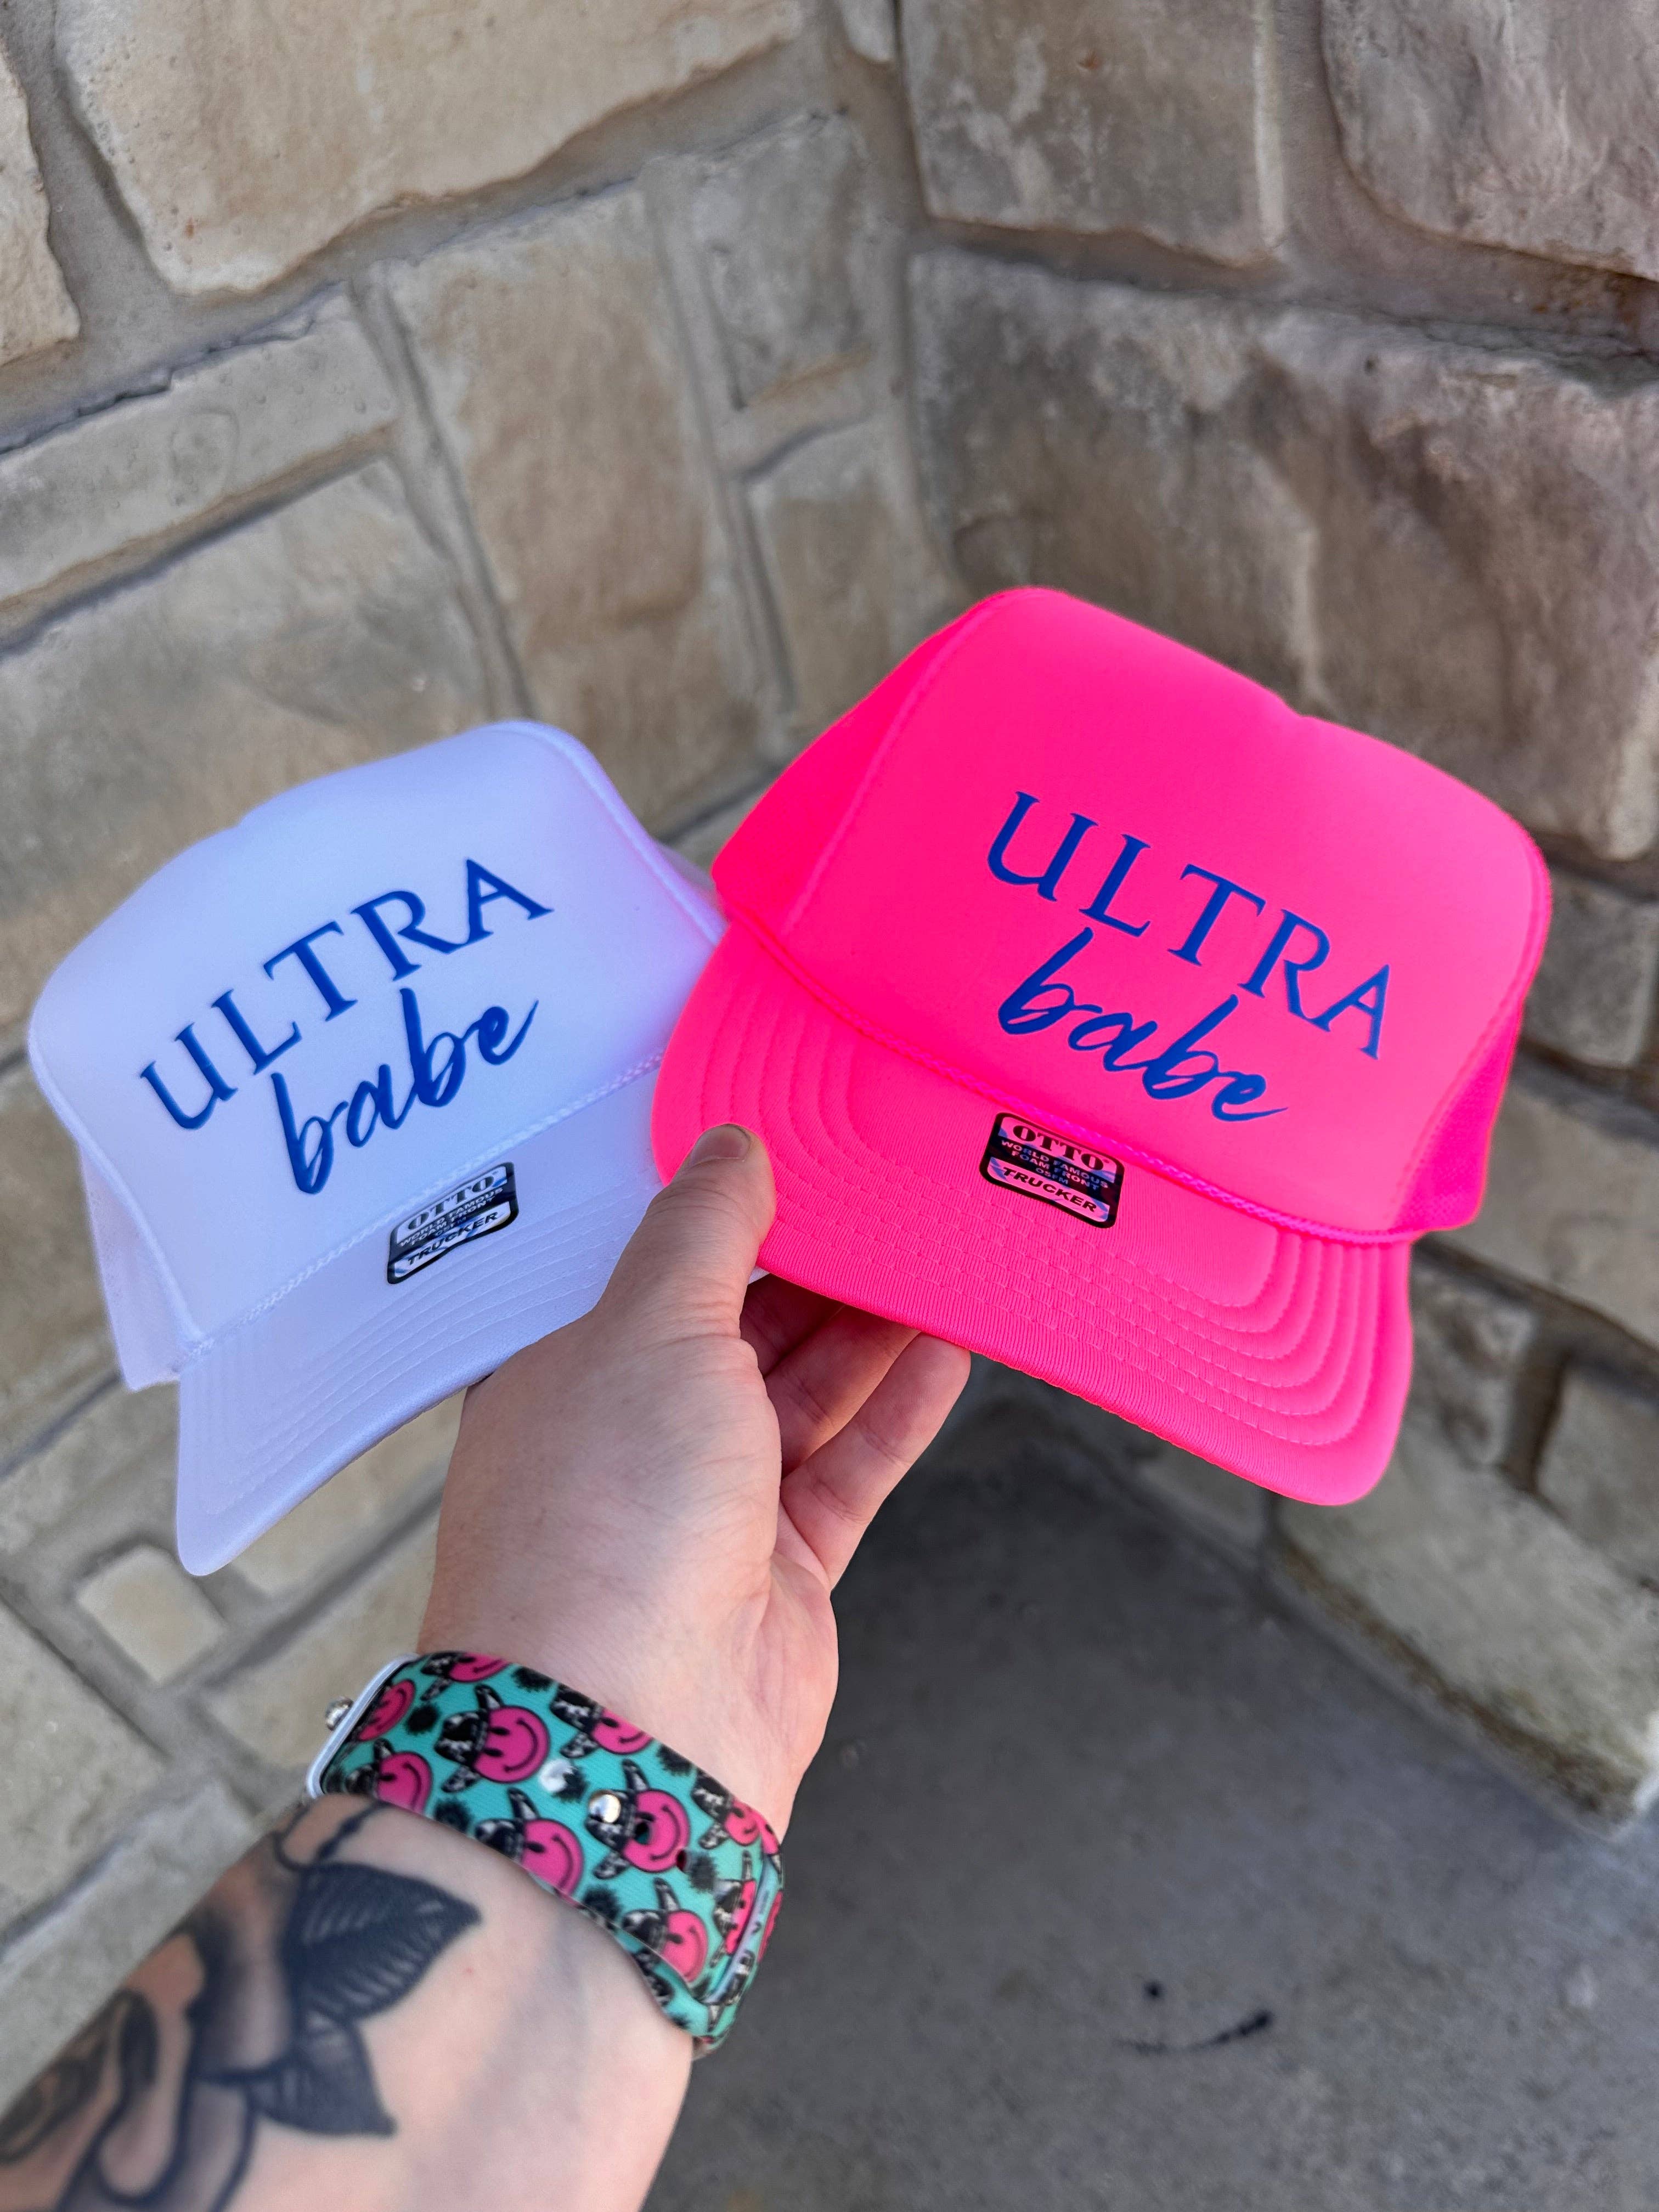 Ultra Babe Trucker Hat